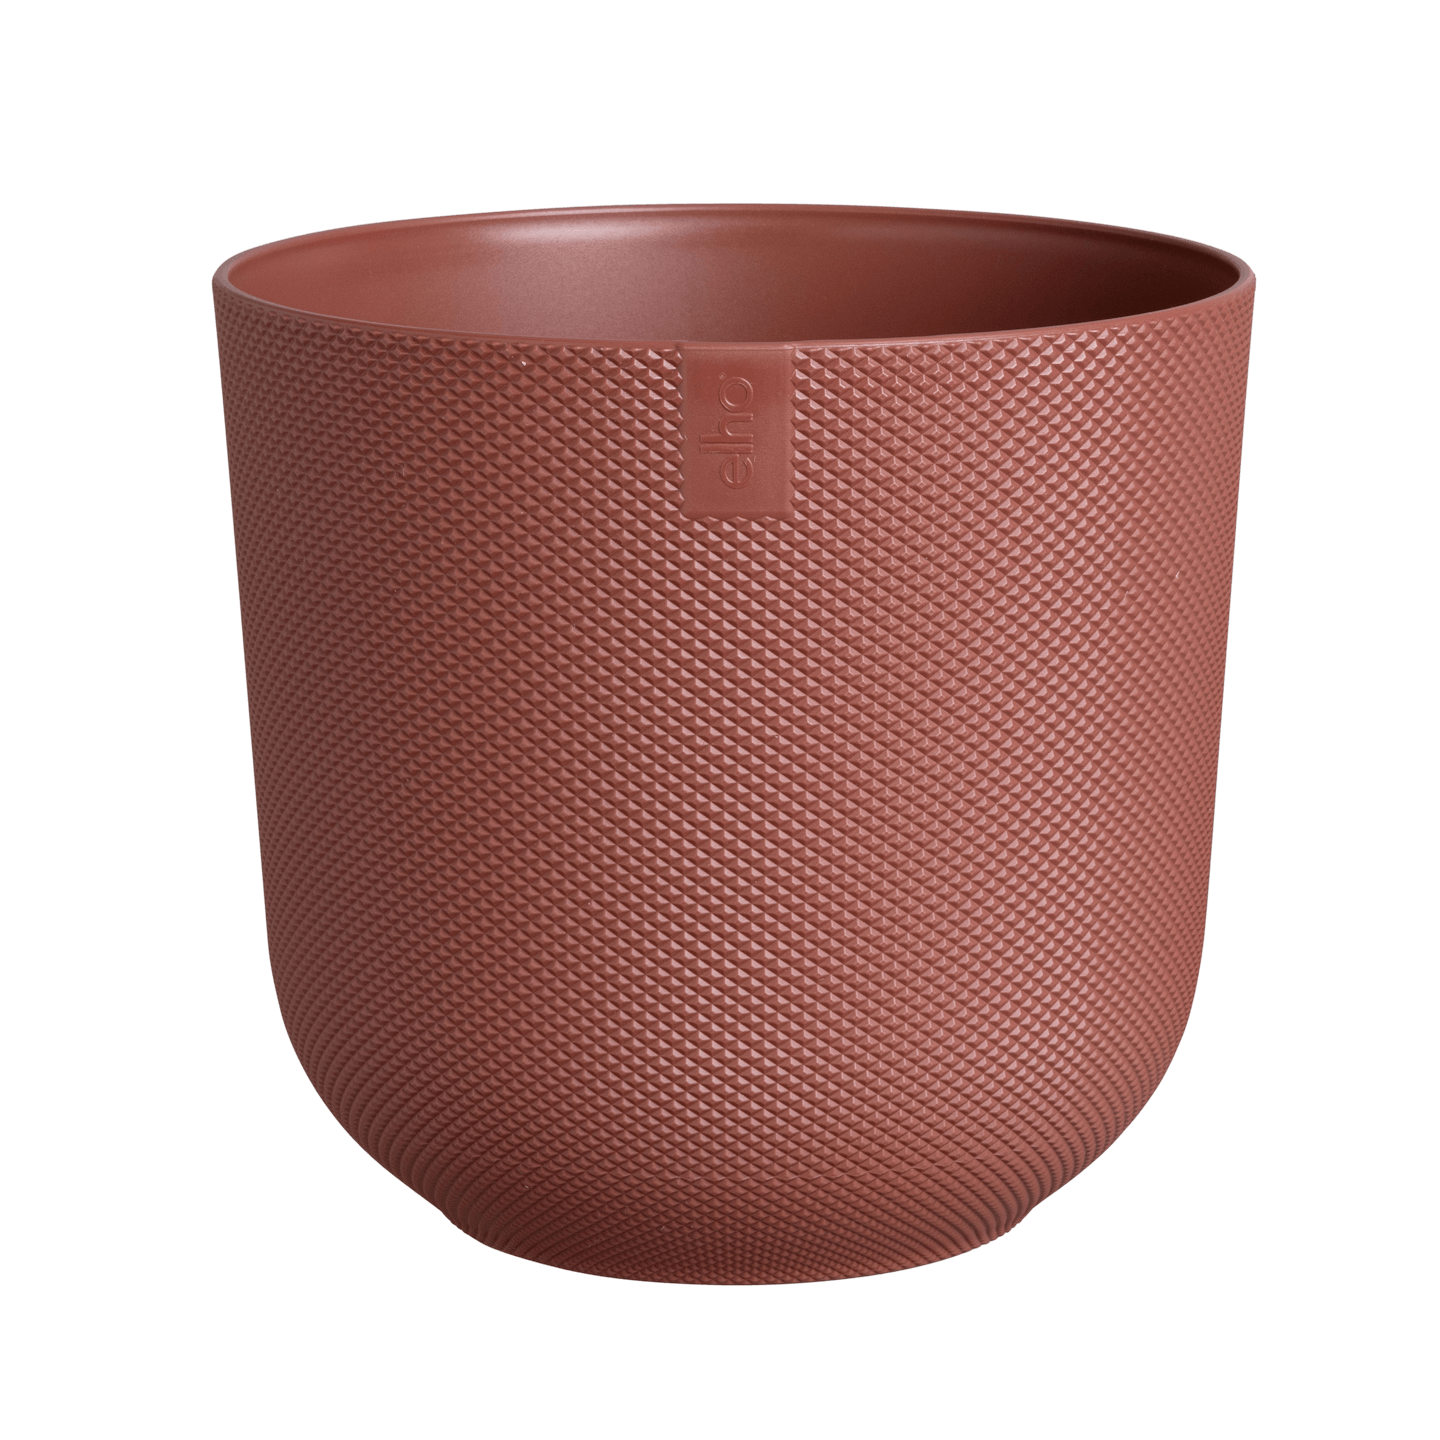 Textured red Elho plant pot